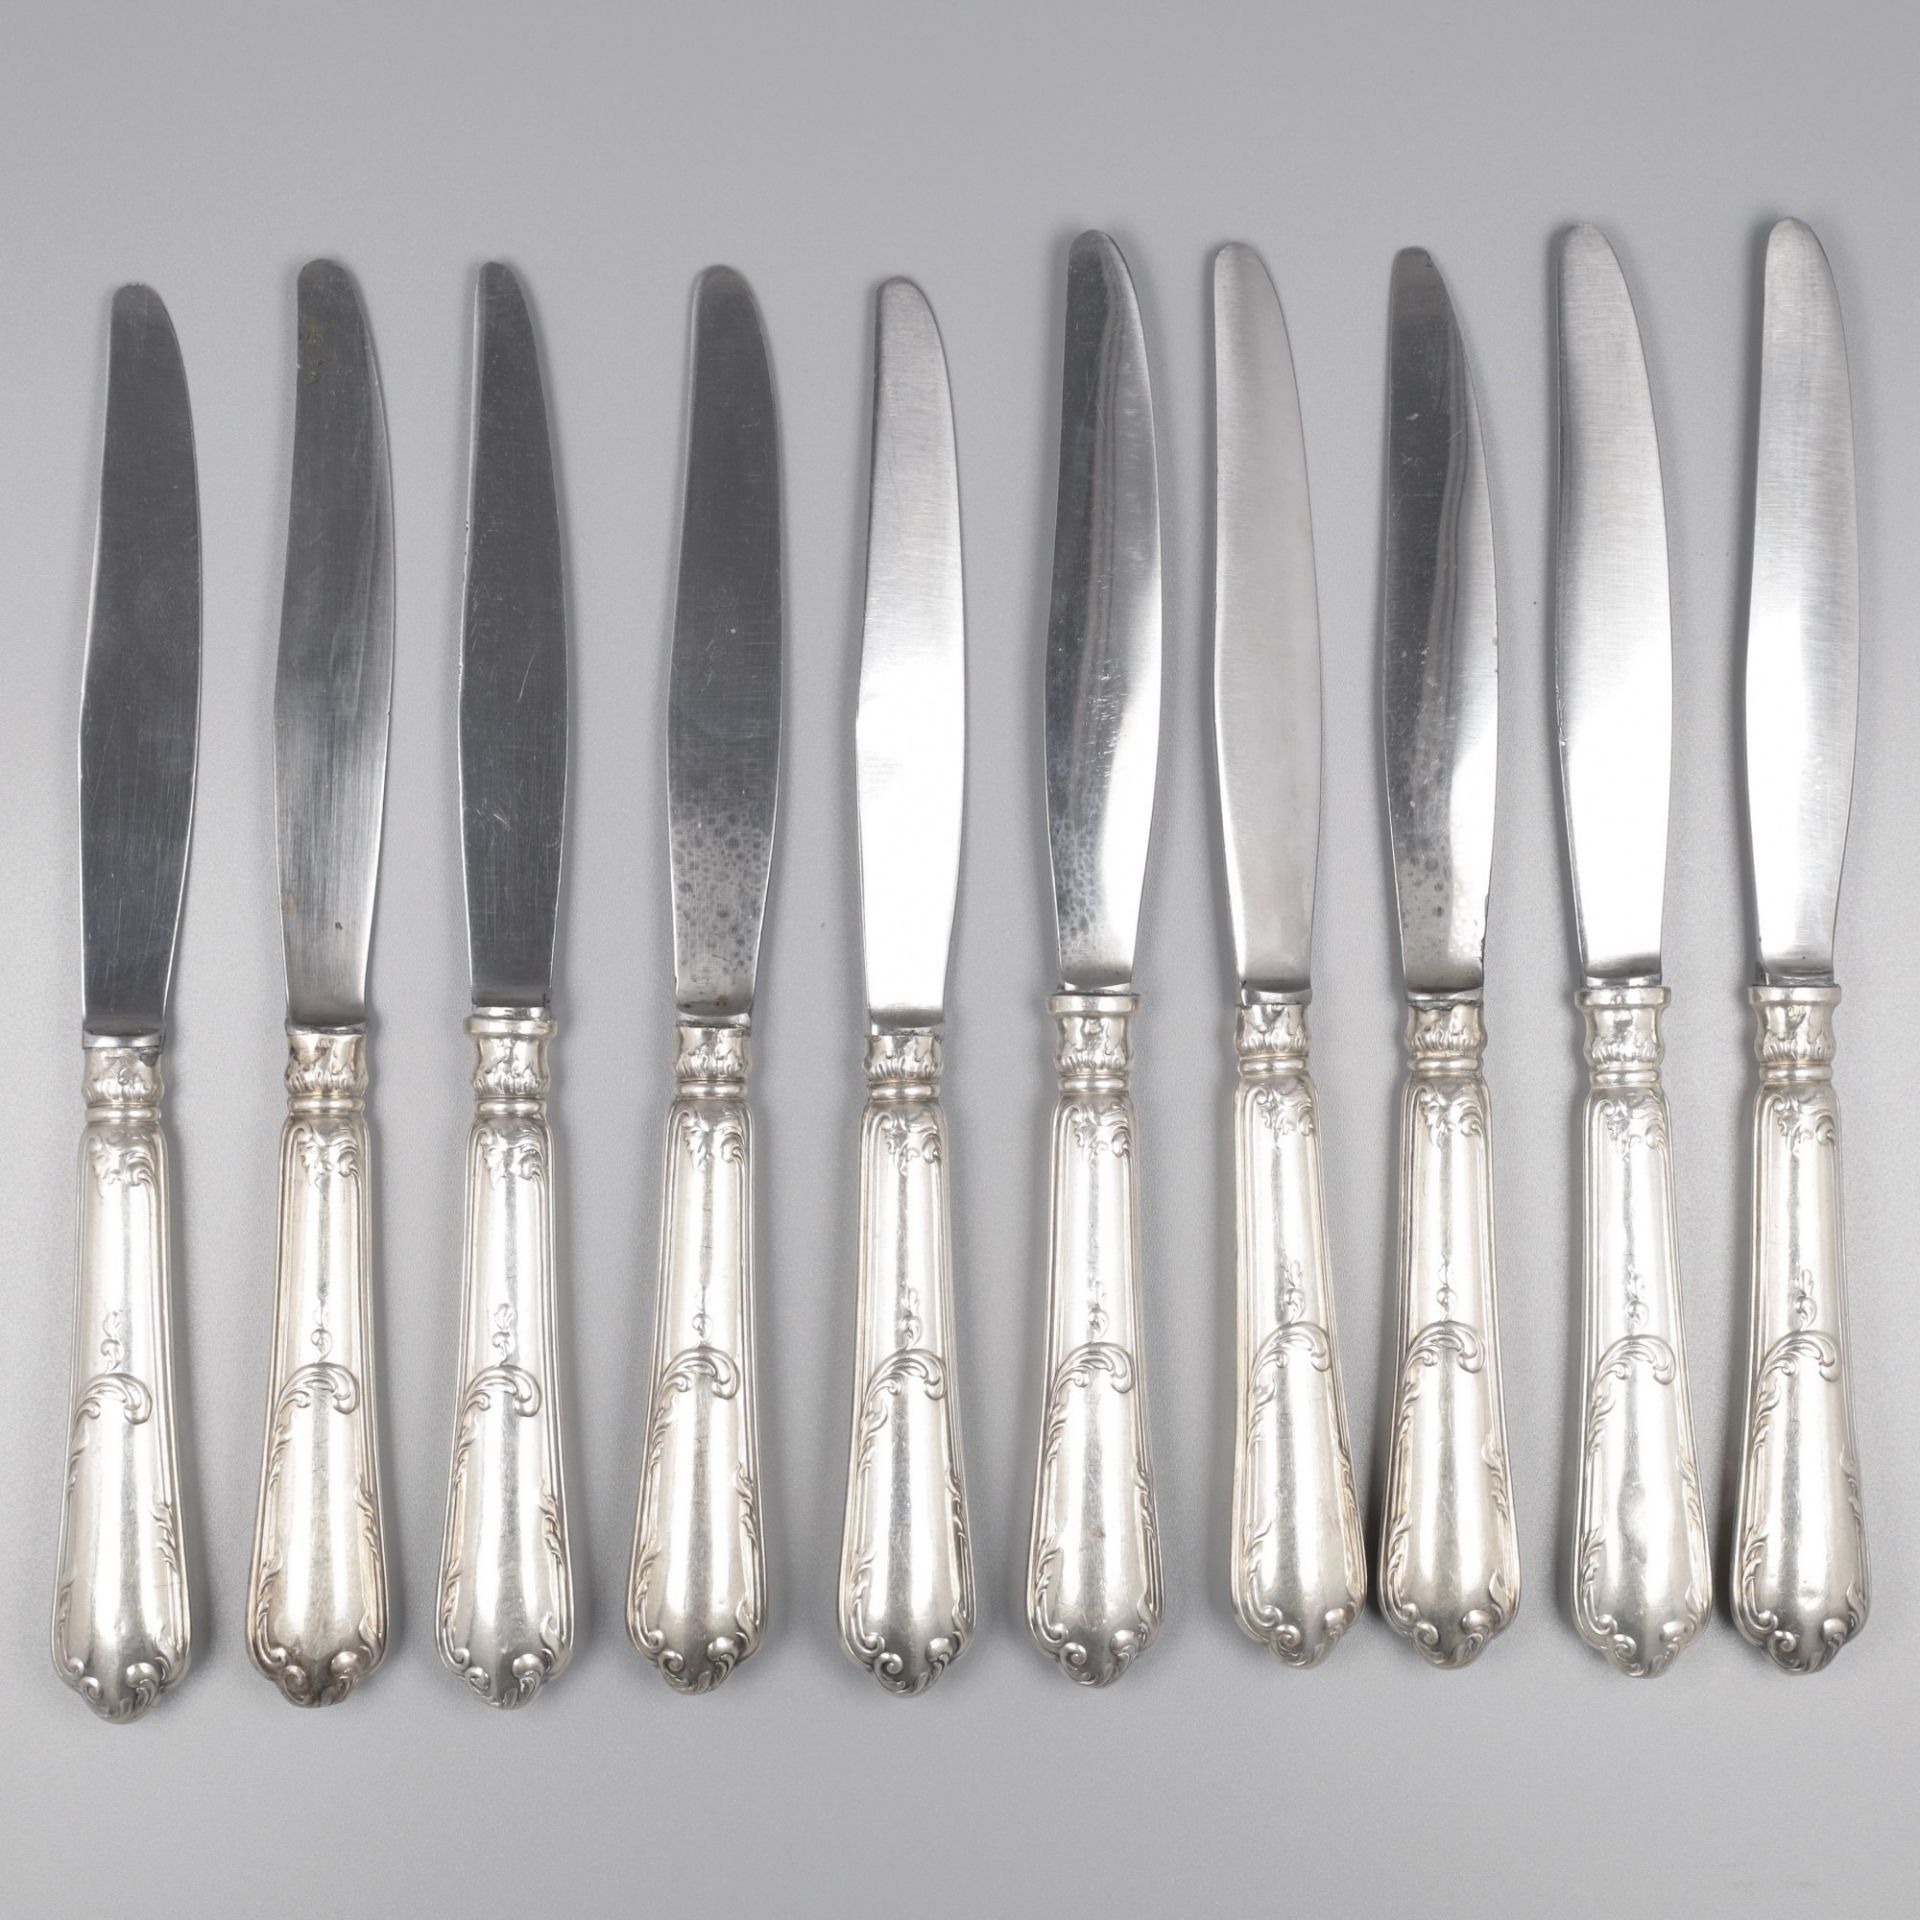 No reserve - 10-piece set of knives silver.